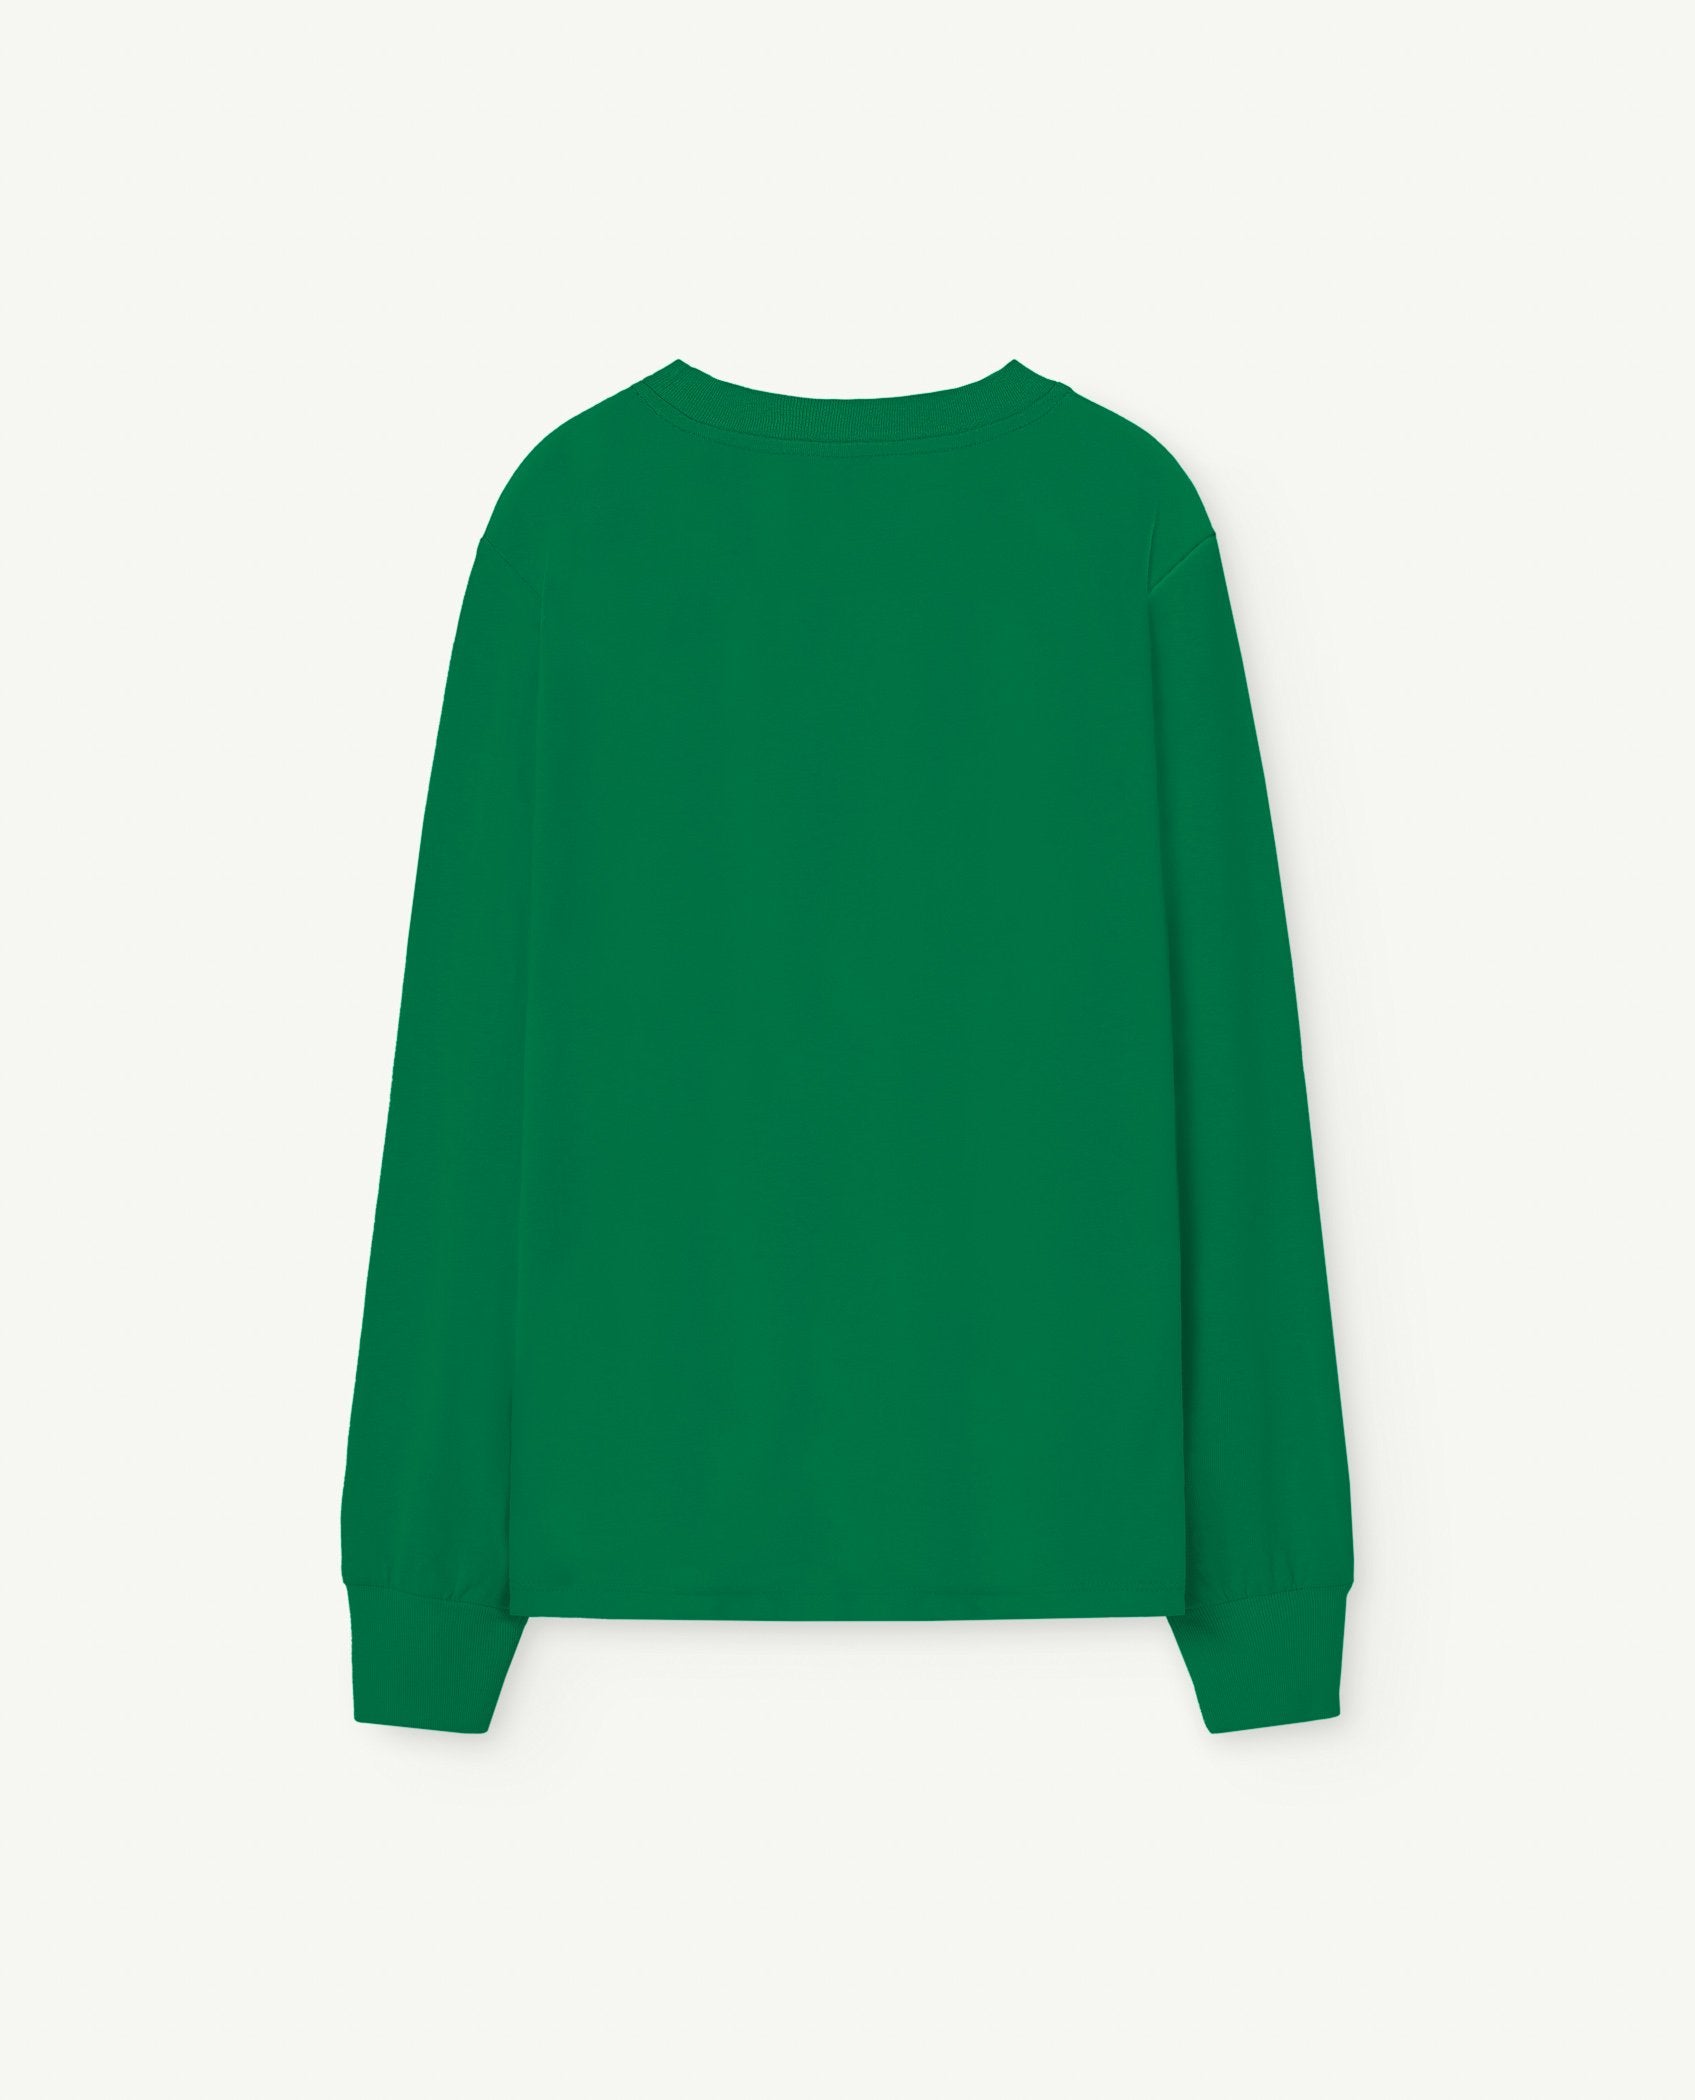 Green Aries Kids Long Sleeve T-Shirt PRODUCT BACK